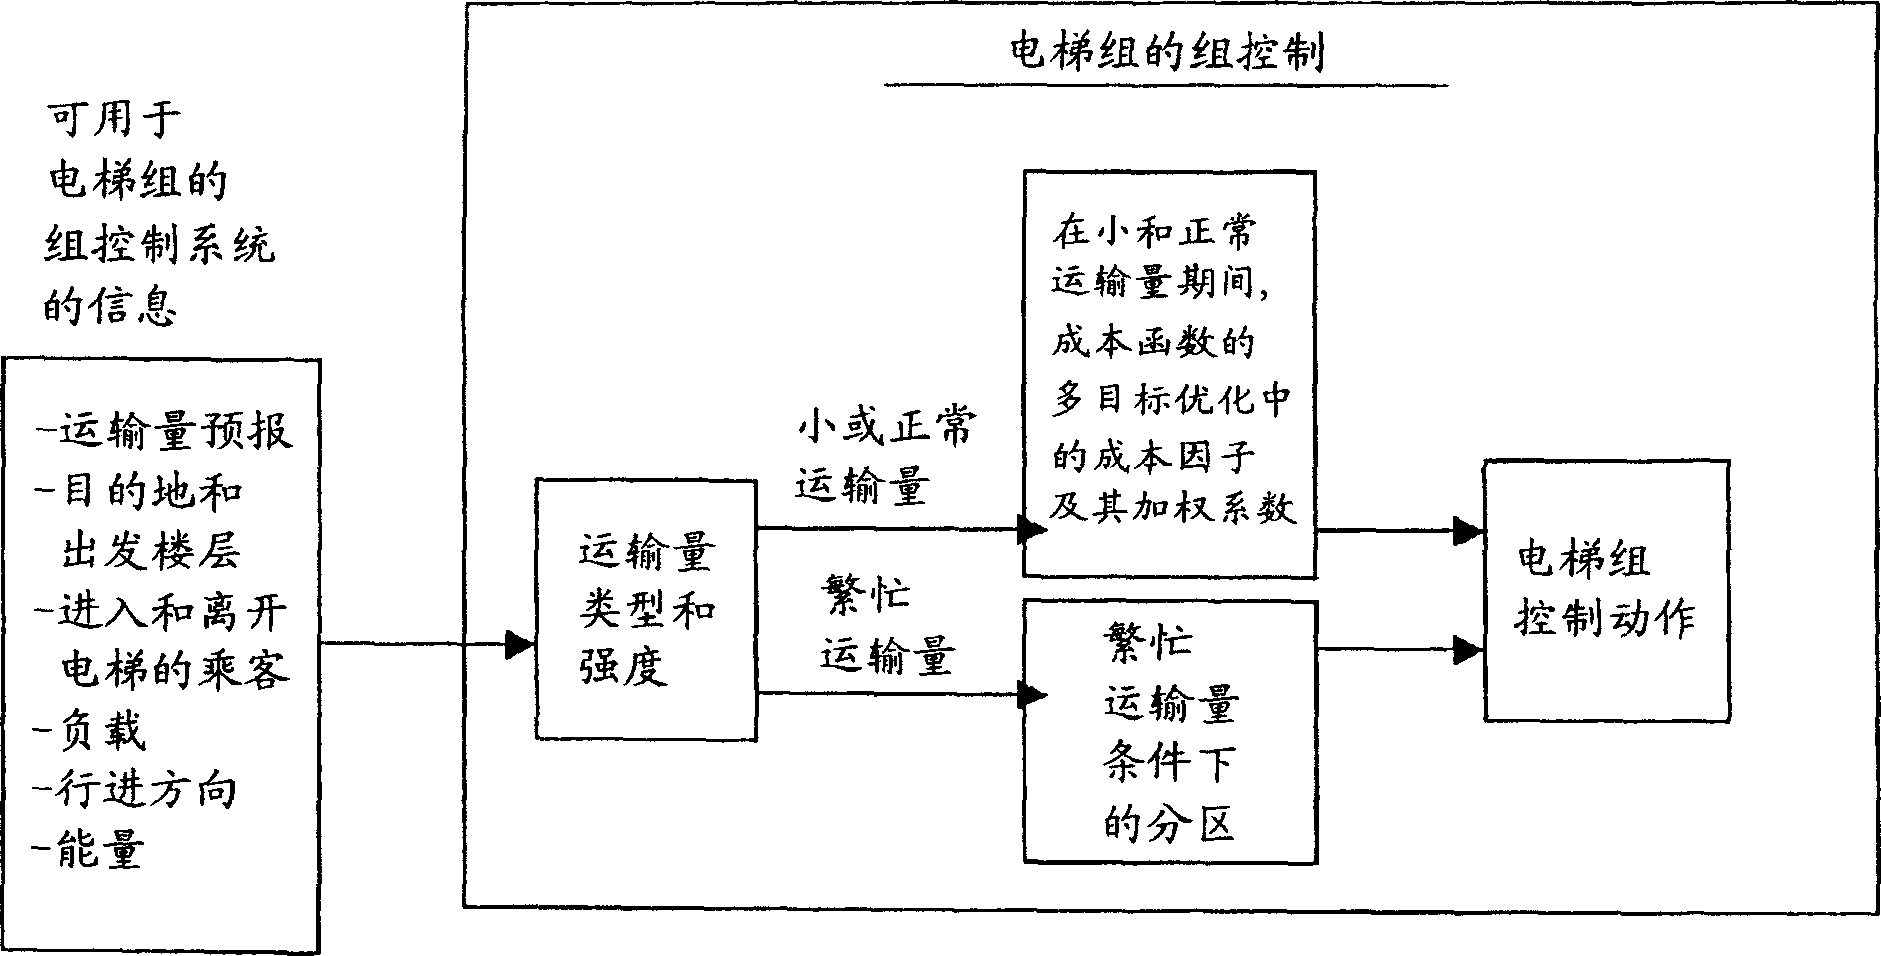 Elevator group control method